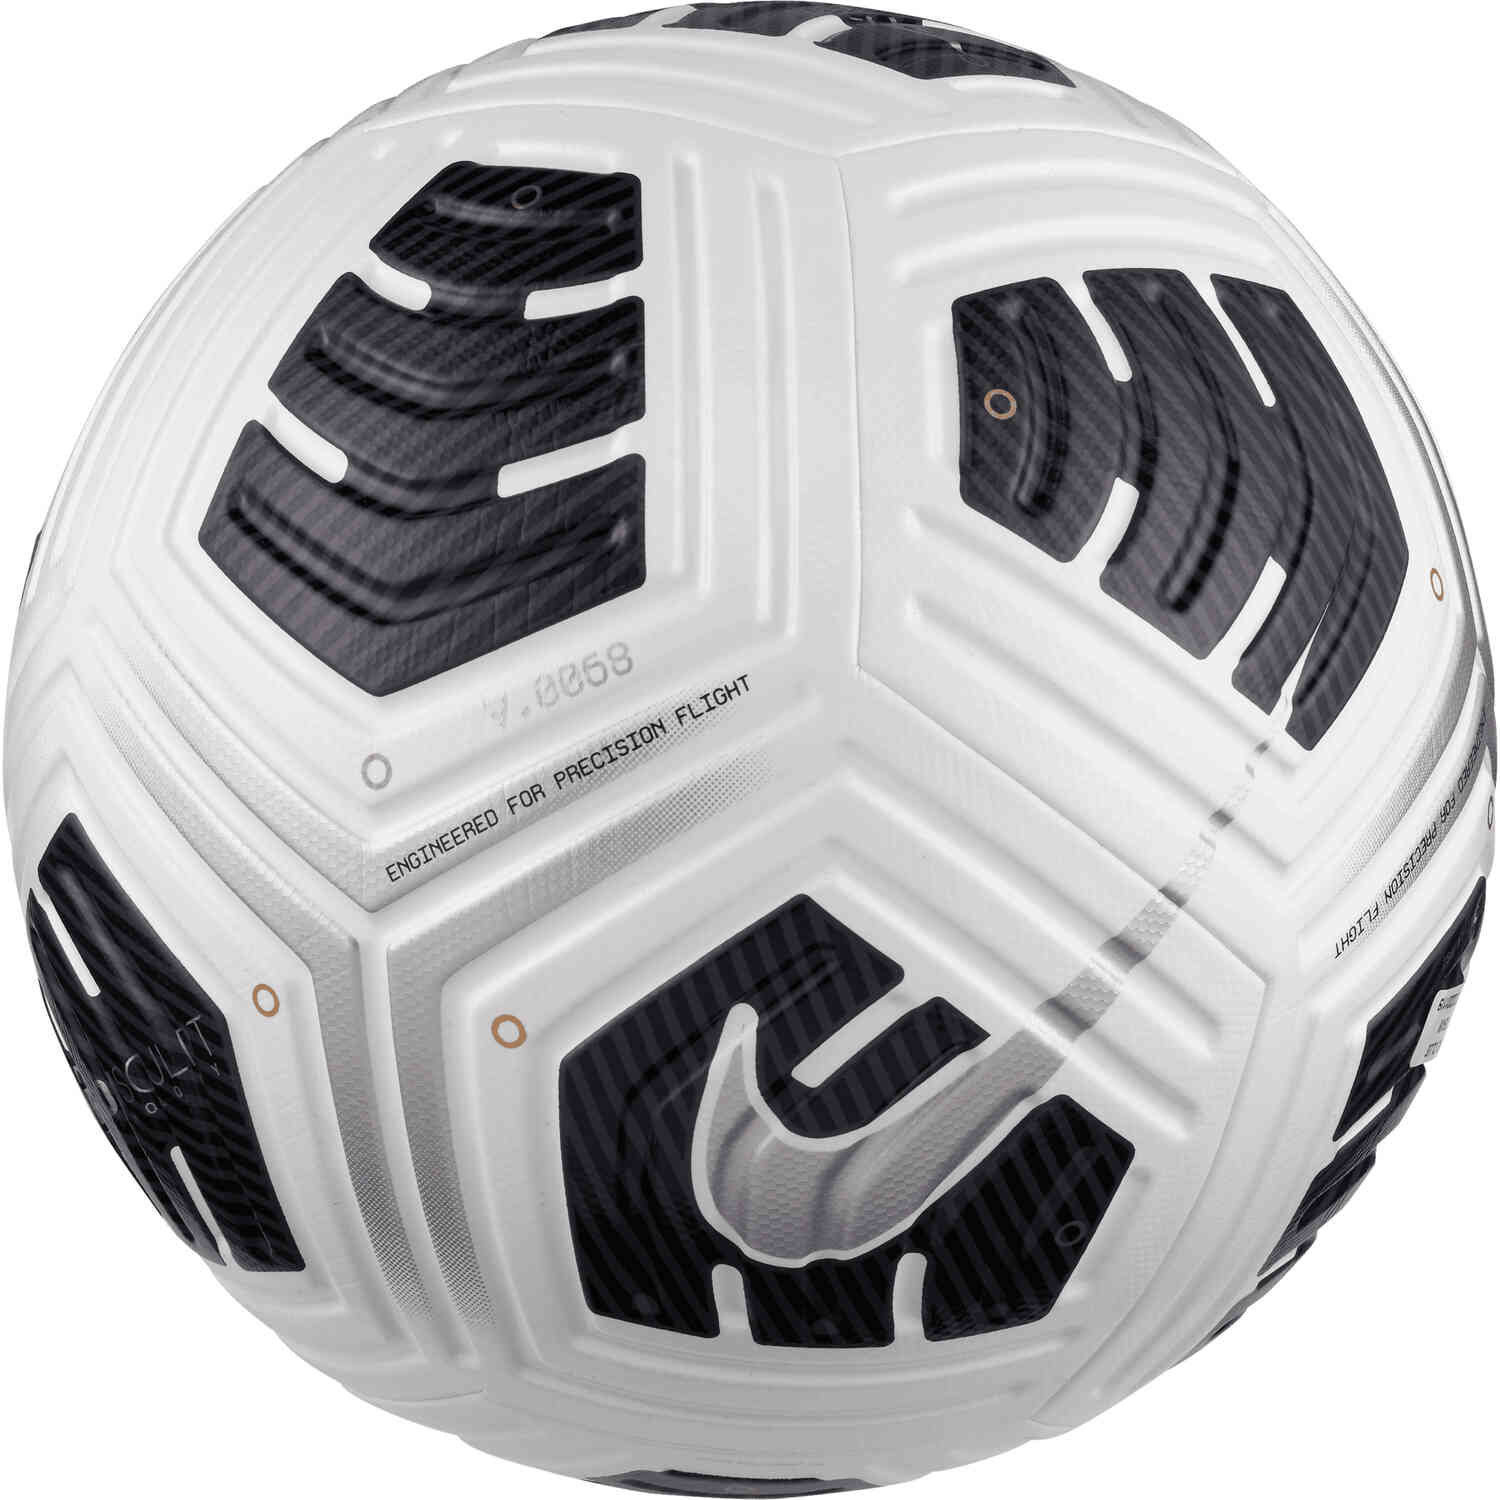 Nike NFHS Club Elite Match Soccer Ball – White & Black with Metallic Silver